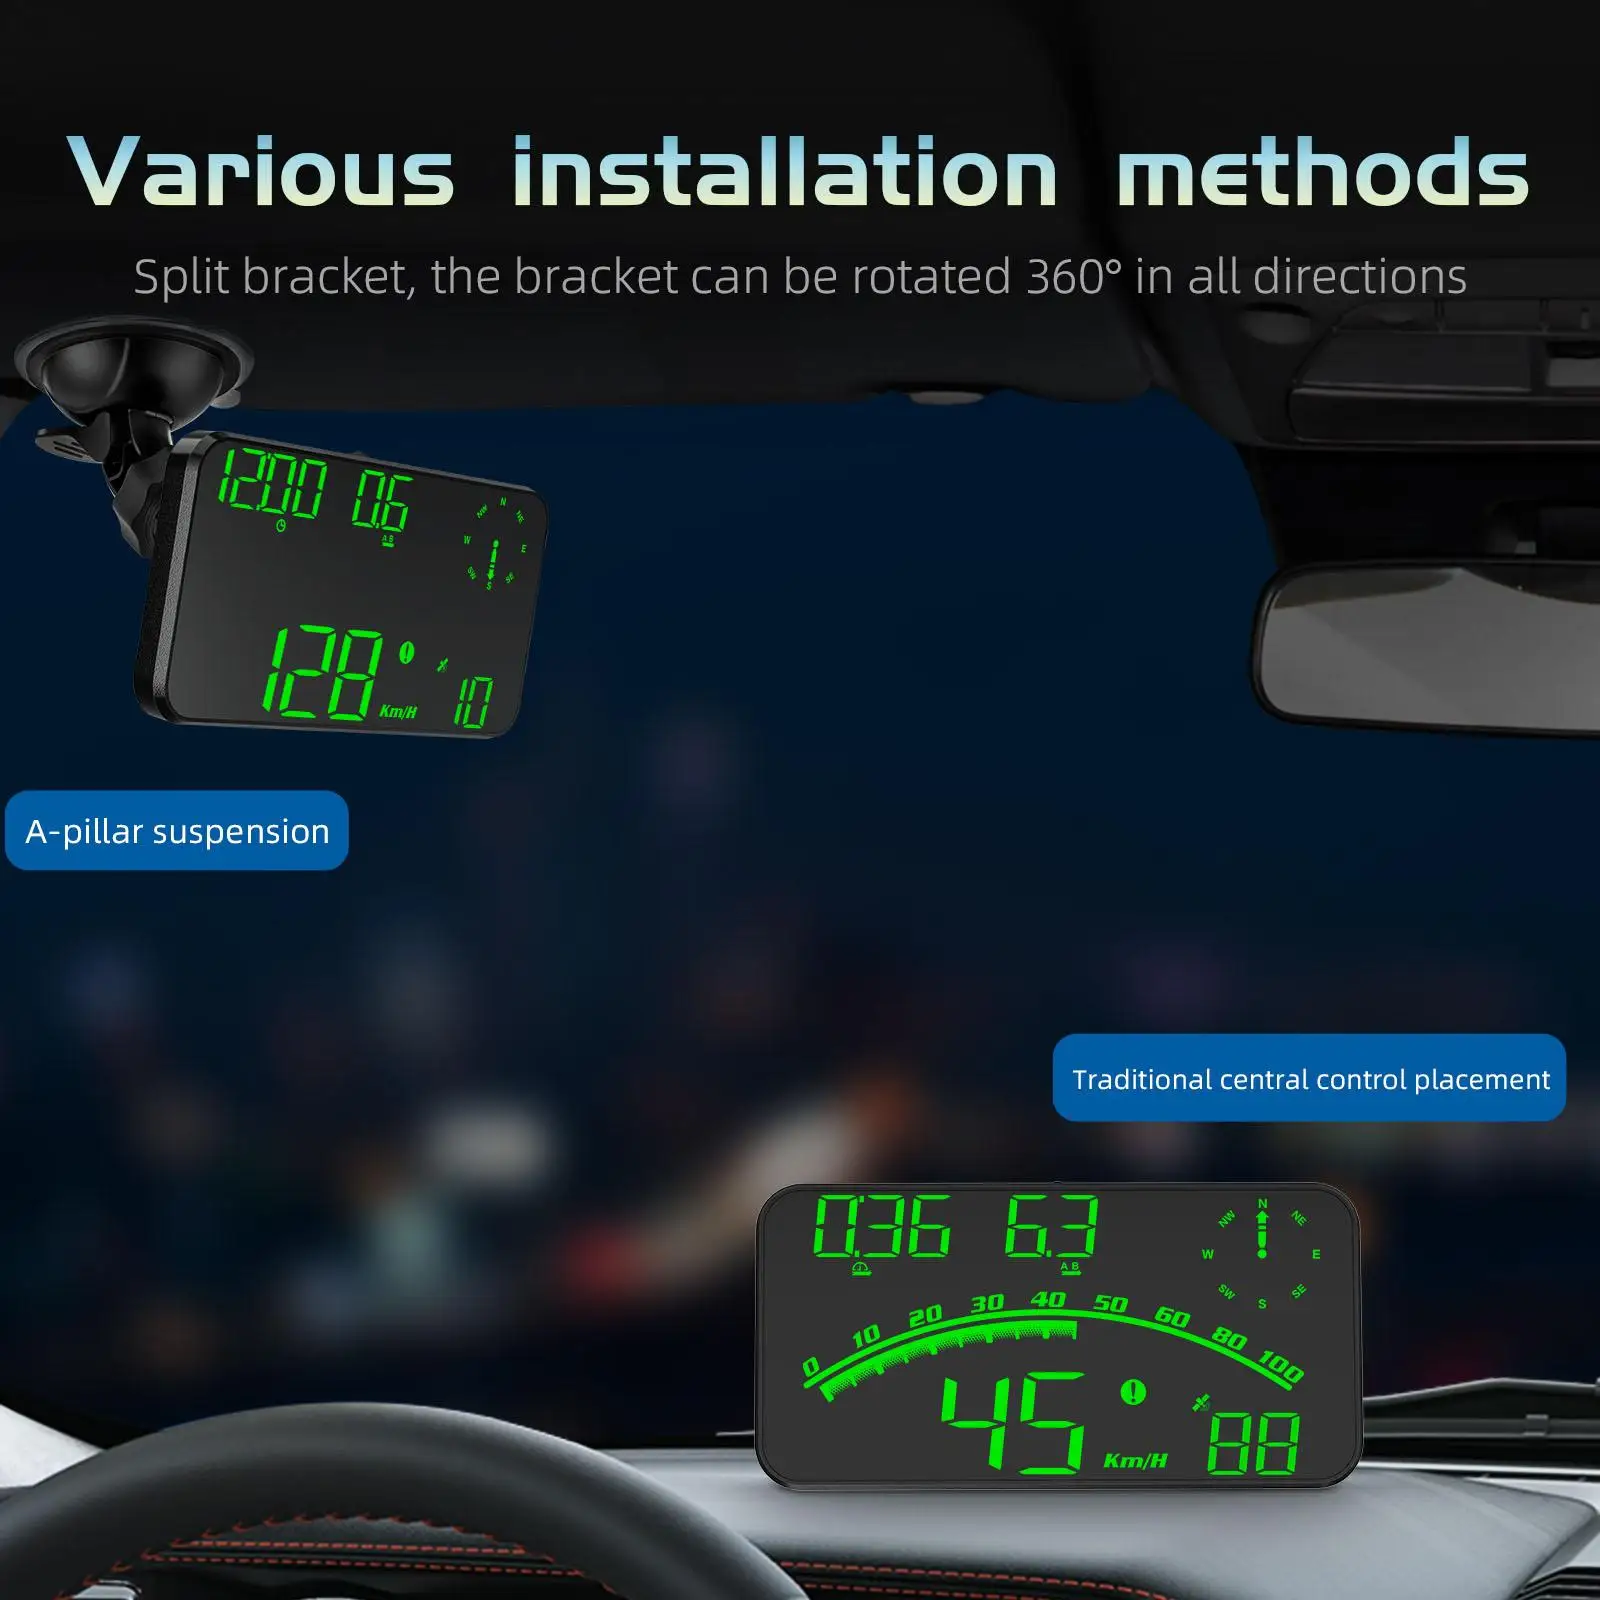 G10 Car     Display HUD Speed Warning Alarm Fatigue Driving Reminder